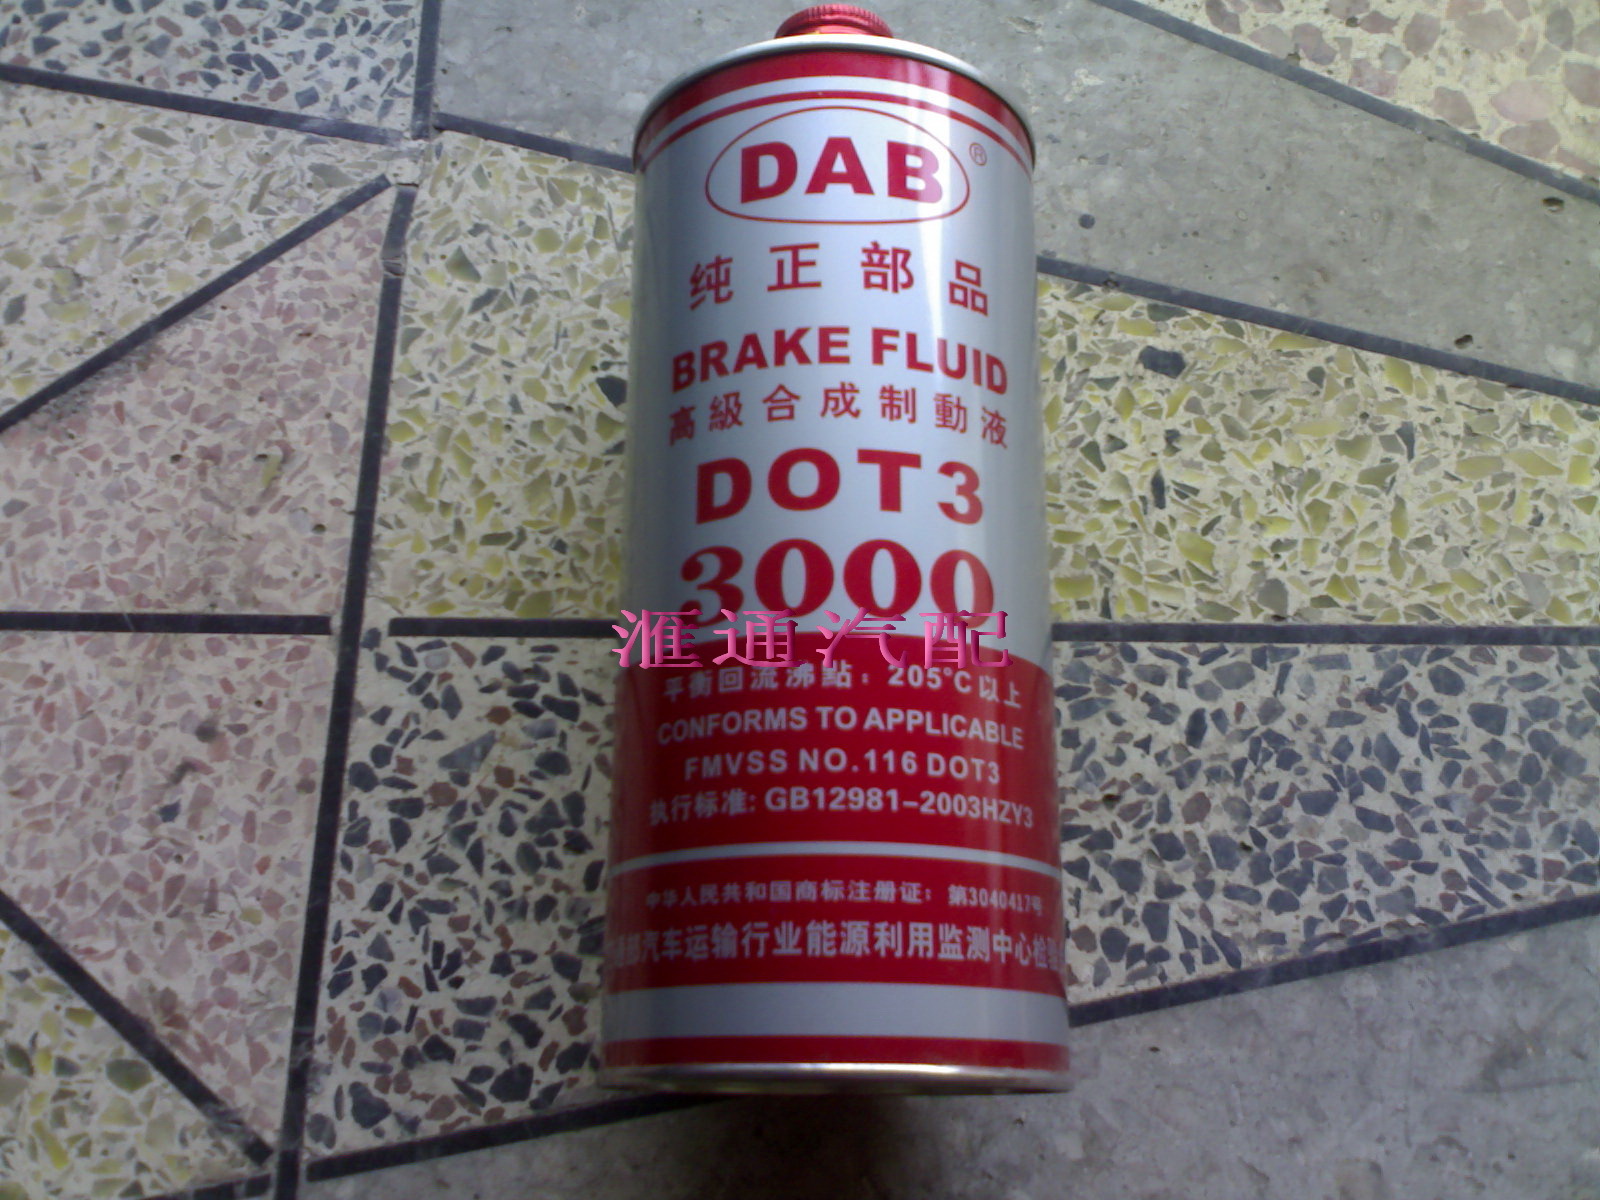 DAB纯正部品DOT3/3000高级合成制动液/刹车油800g(克)